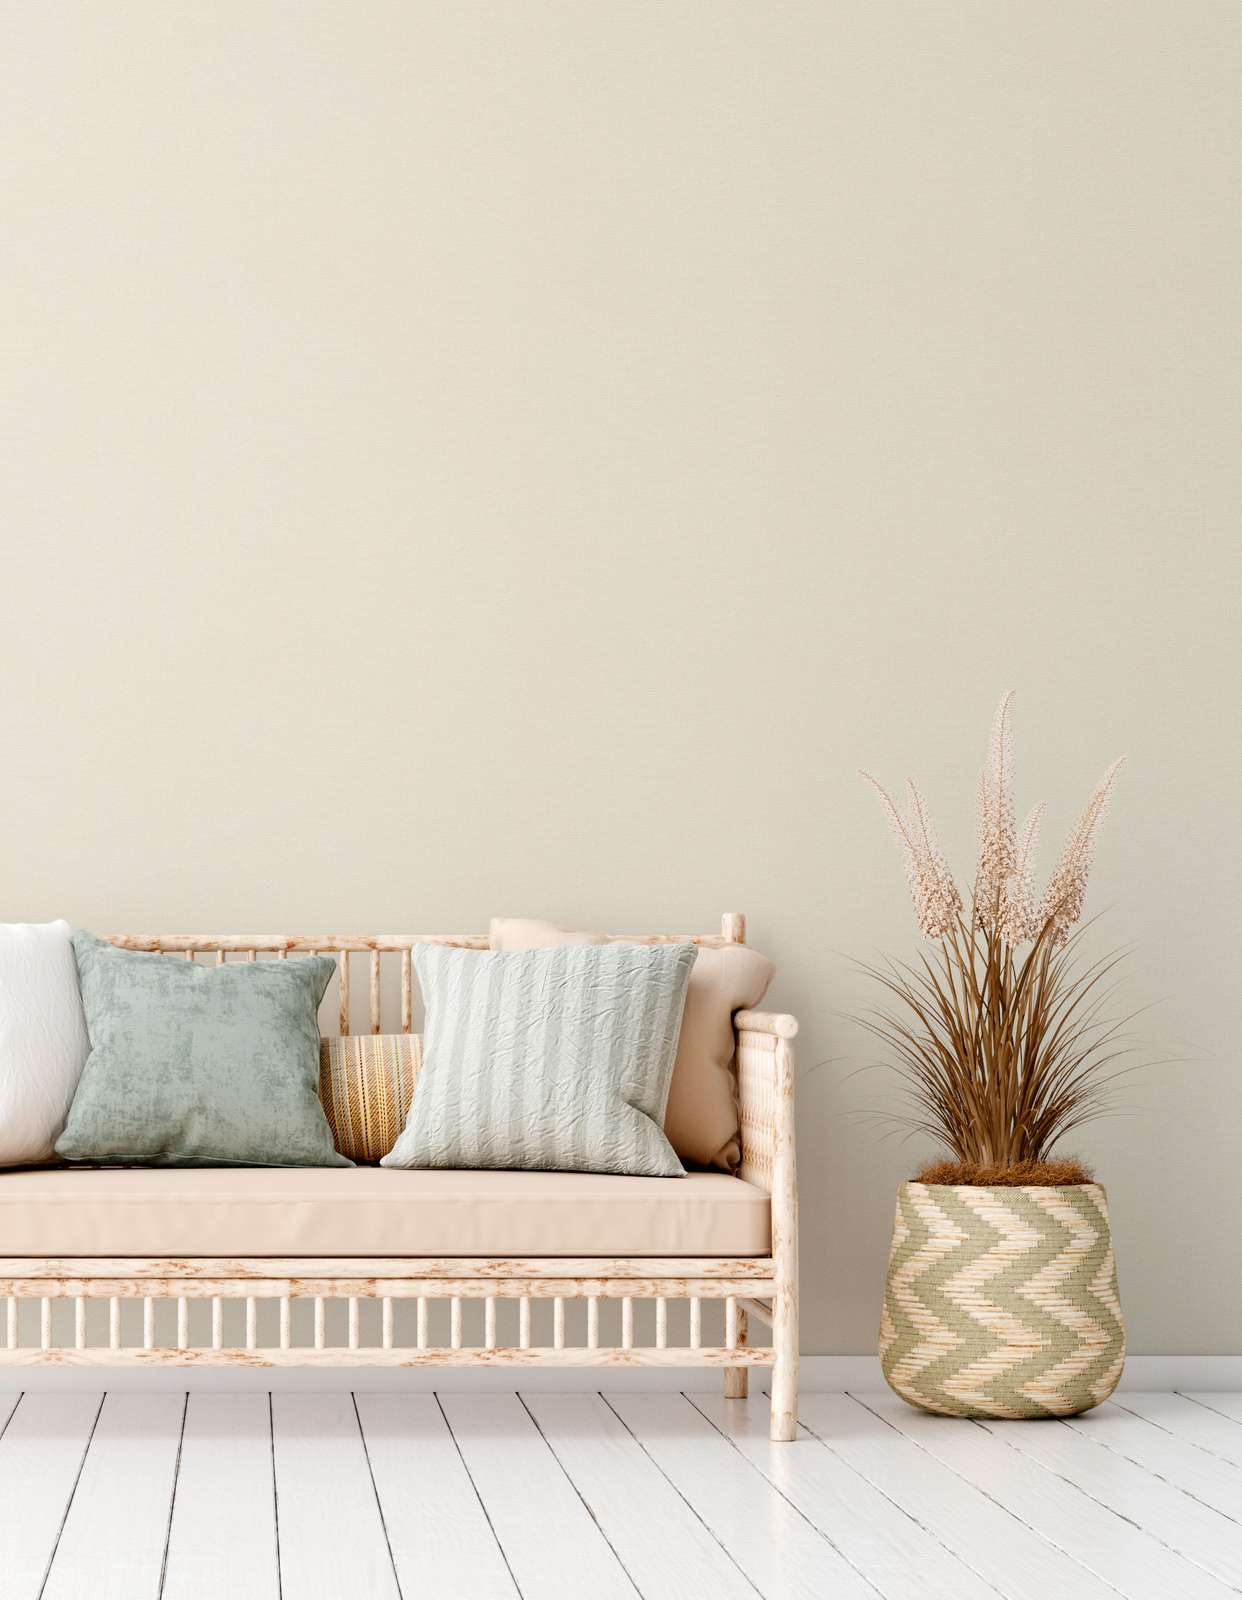             PVC-free plain wallpaper with linen look - beige, white
        